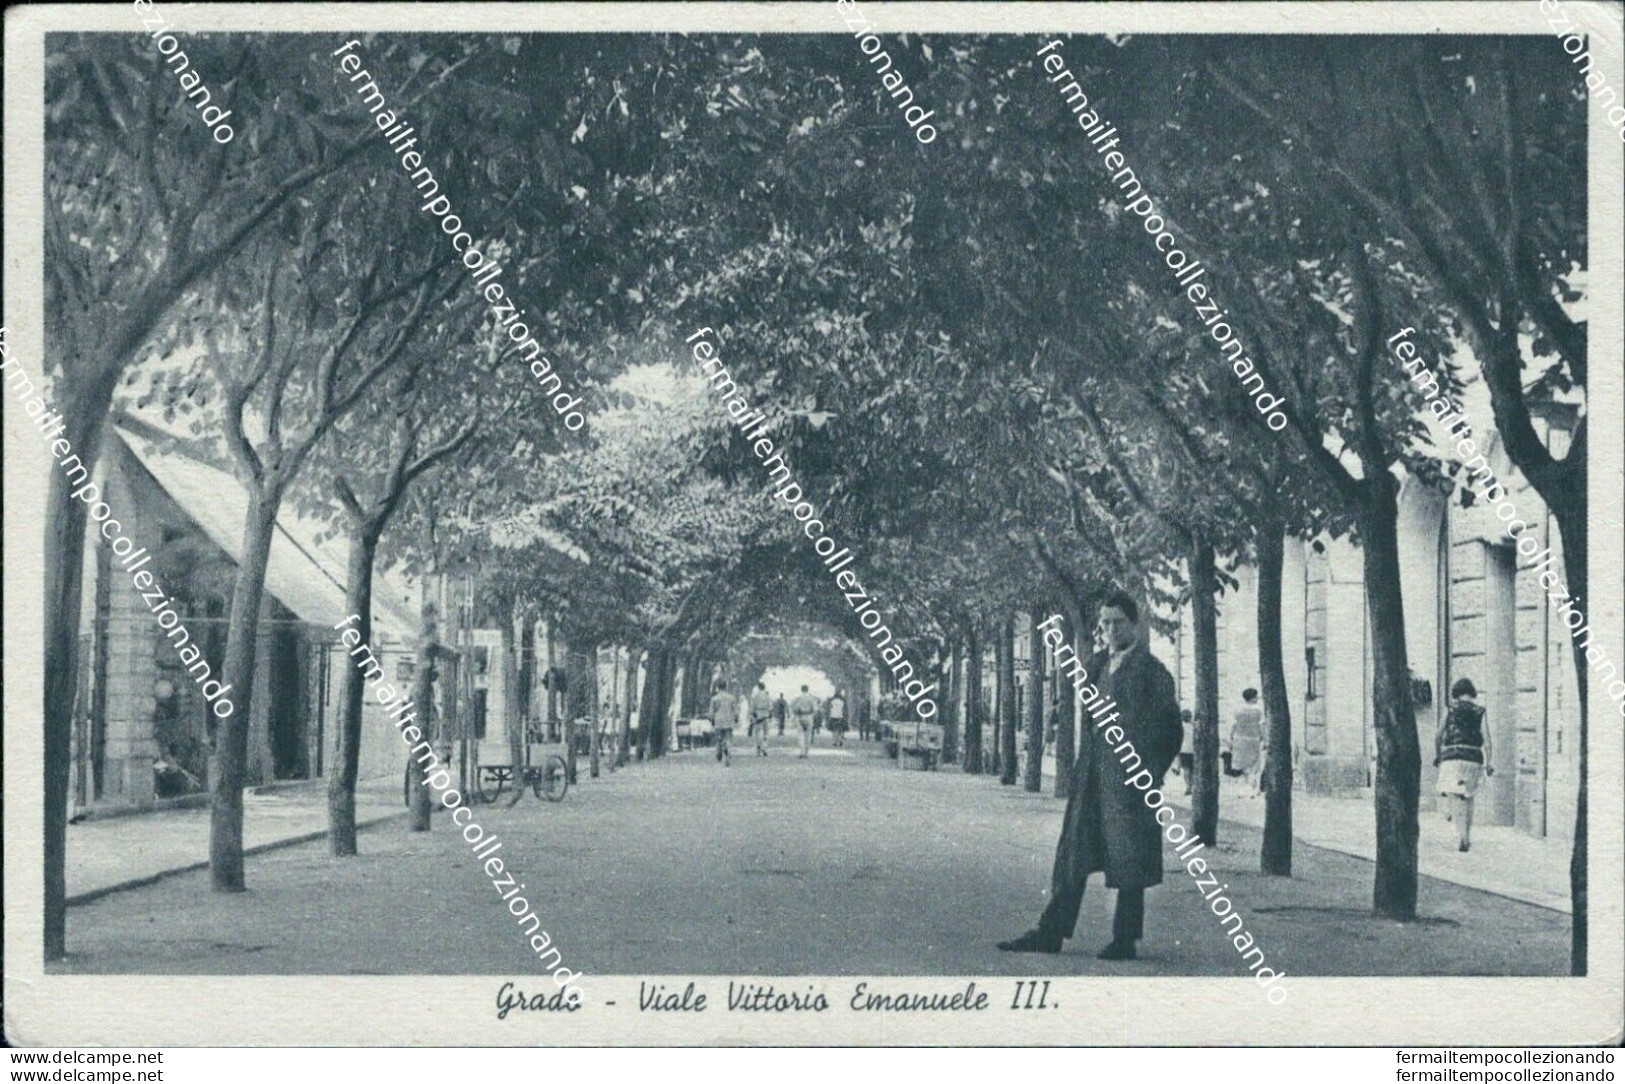 Cm354 Cartolina Grado Viale Vittorio Emanuele III Provincia Di Gorizia Friuli - Gorizia